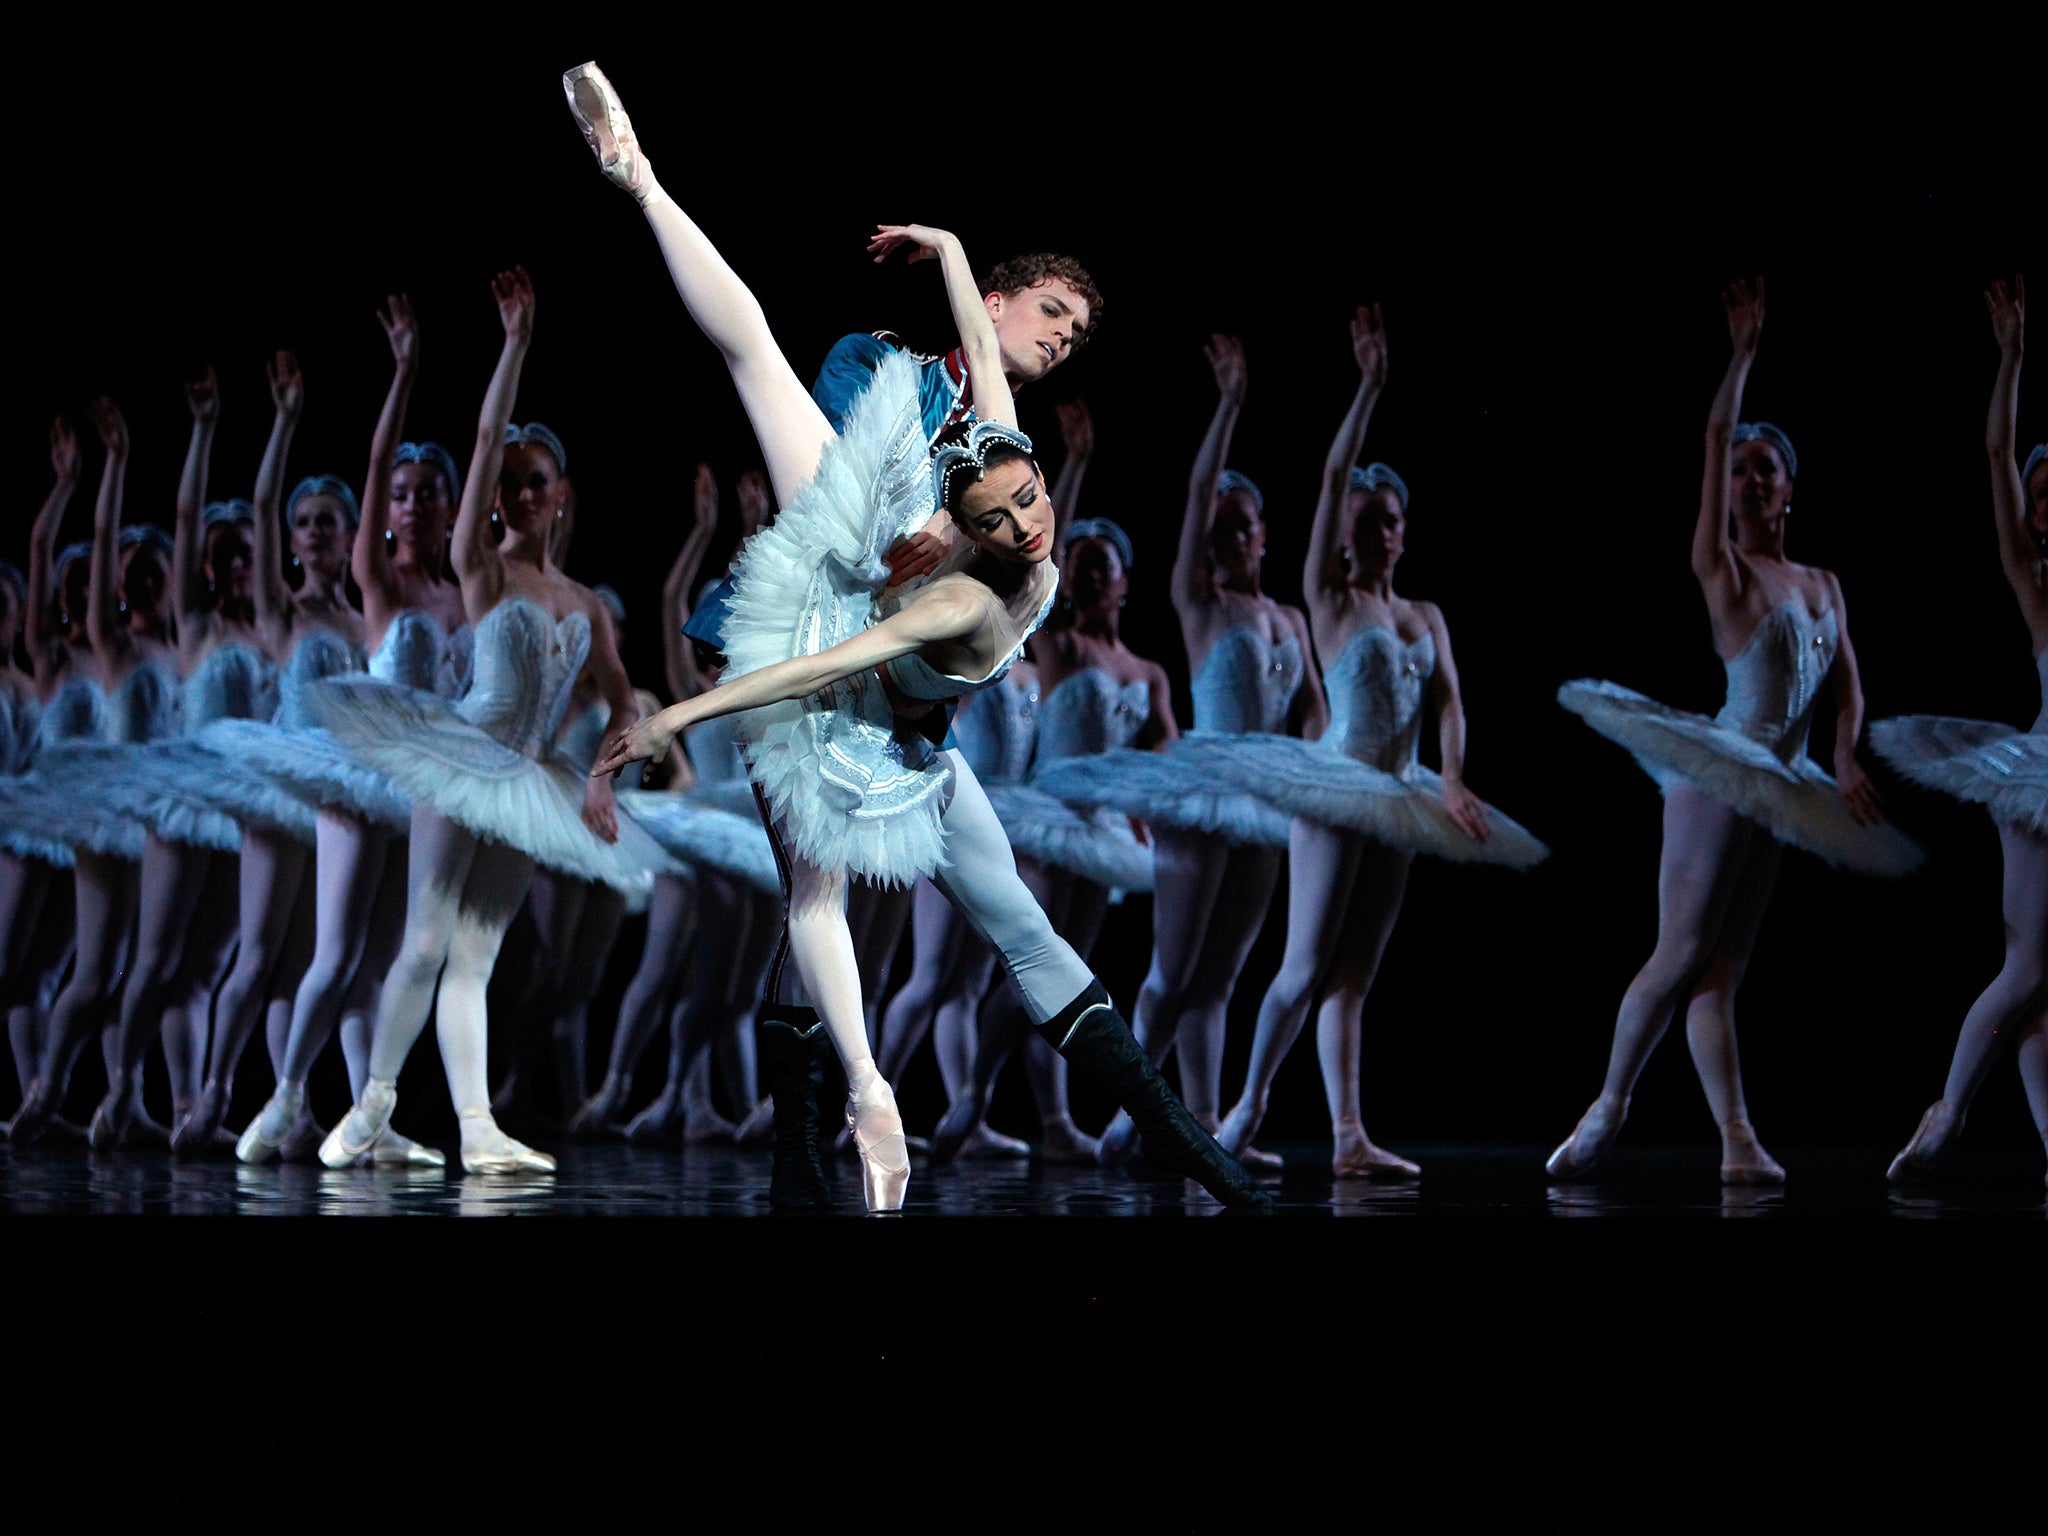 The Australian Ballet perform ‘Swan Lake’ in 2012. The ballet premiered on 20 February 1877